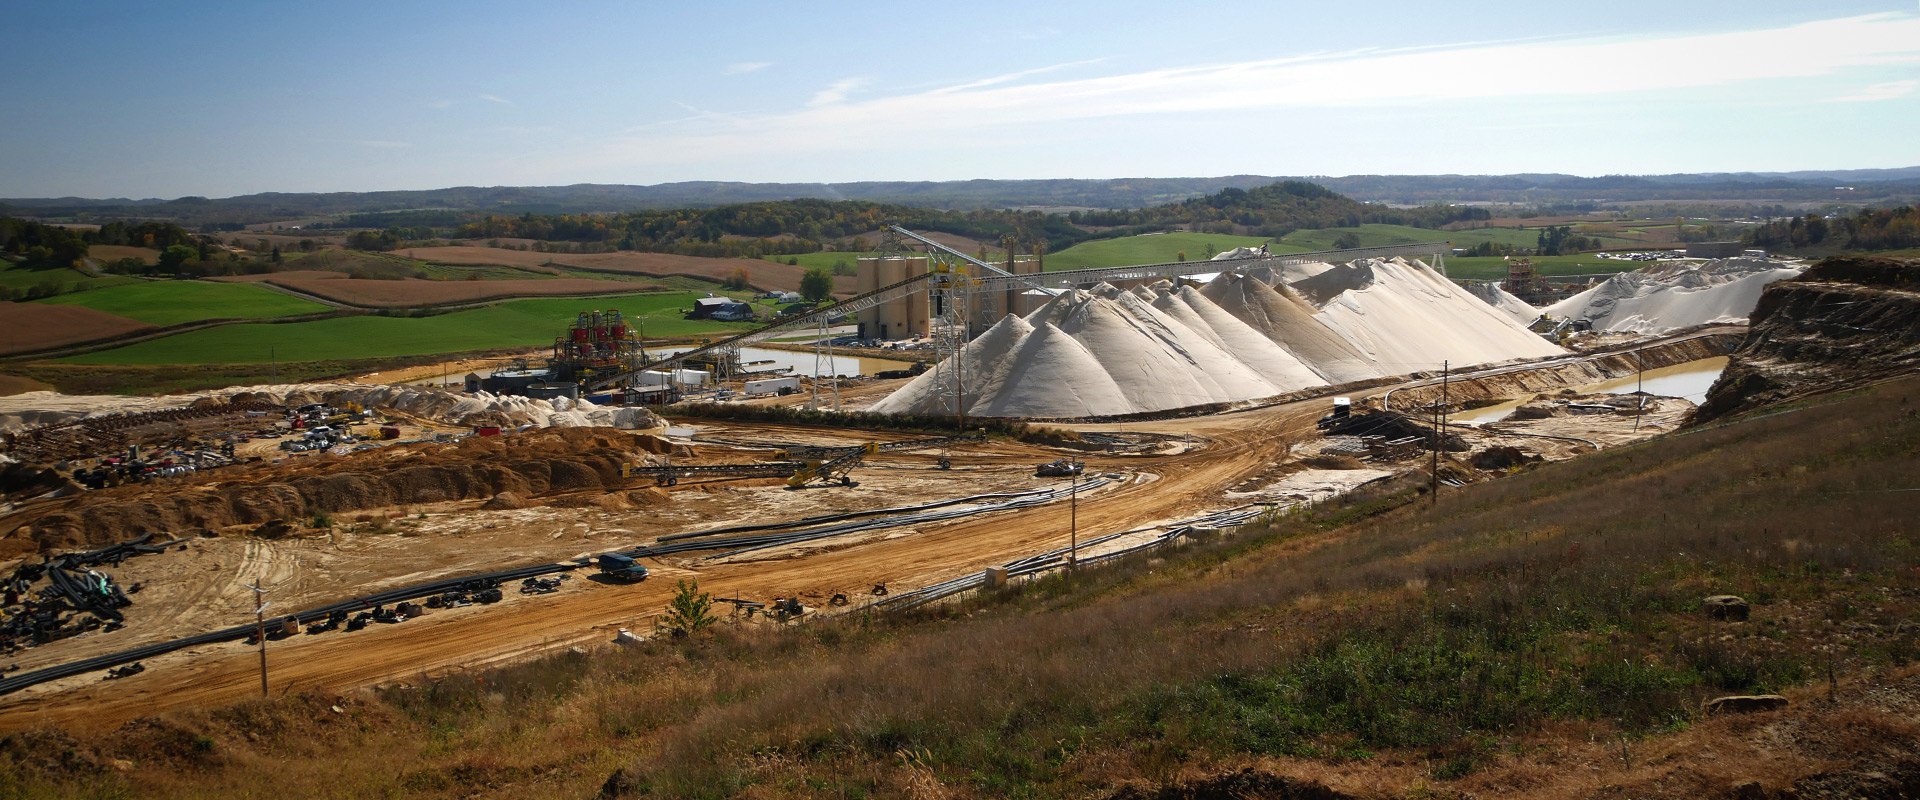 header photo of a quarry operating